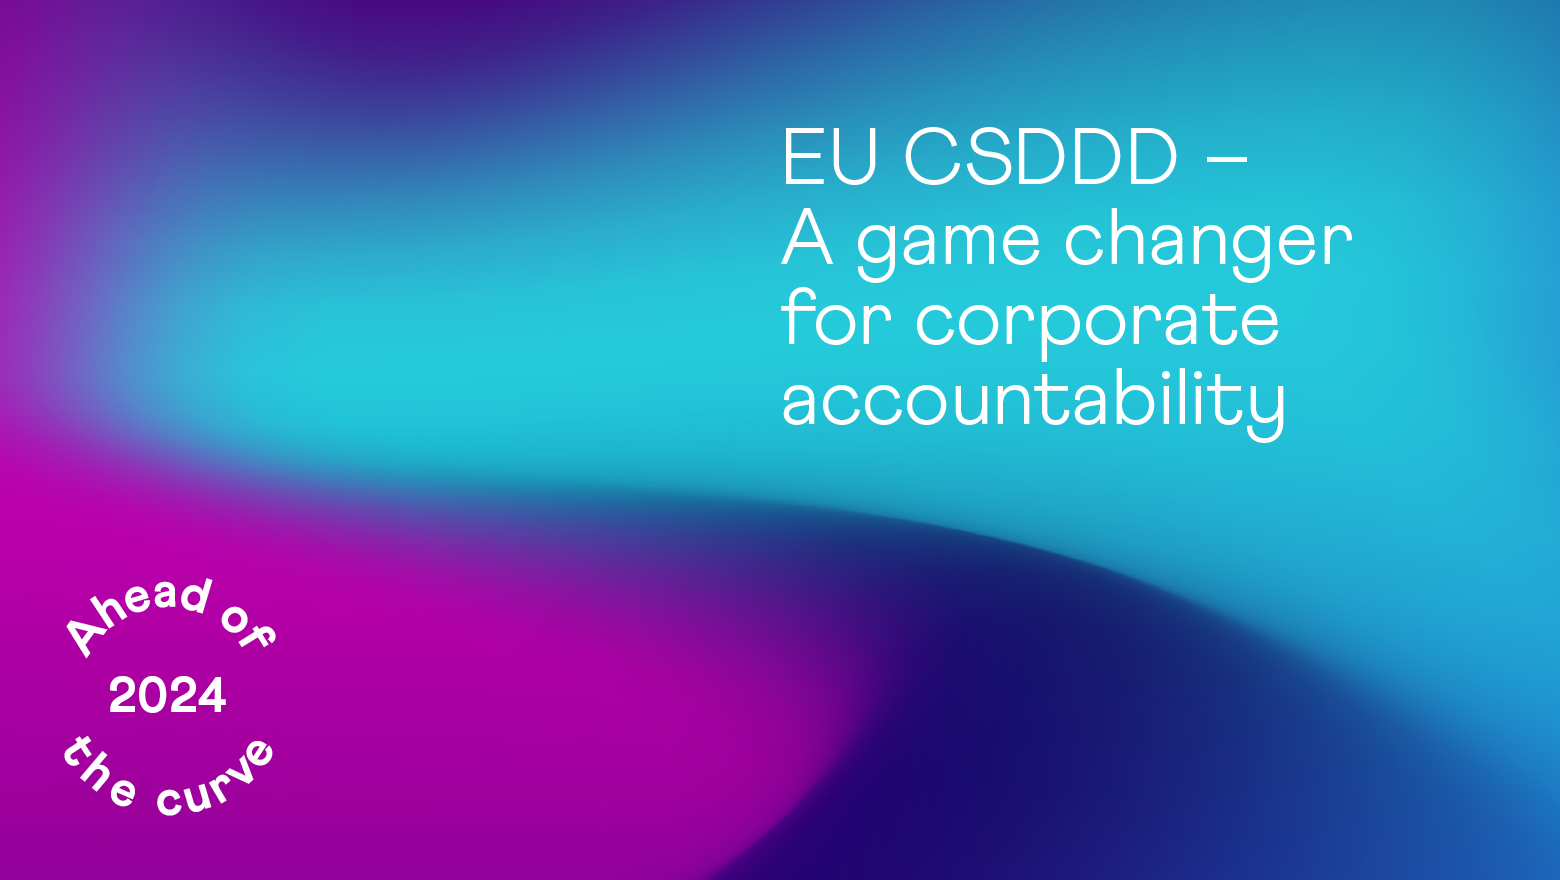 EU CSDDD – A game changer for corporate accountability